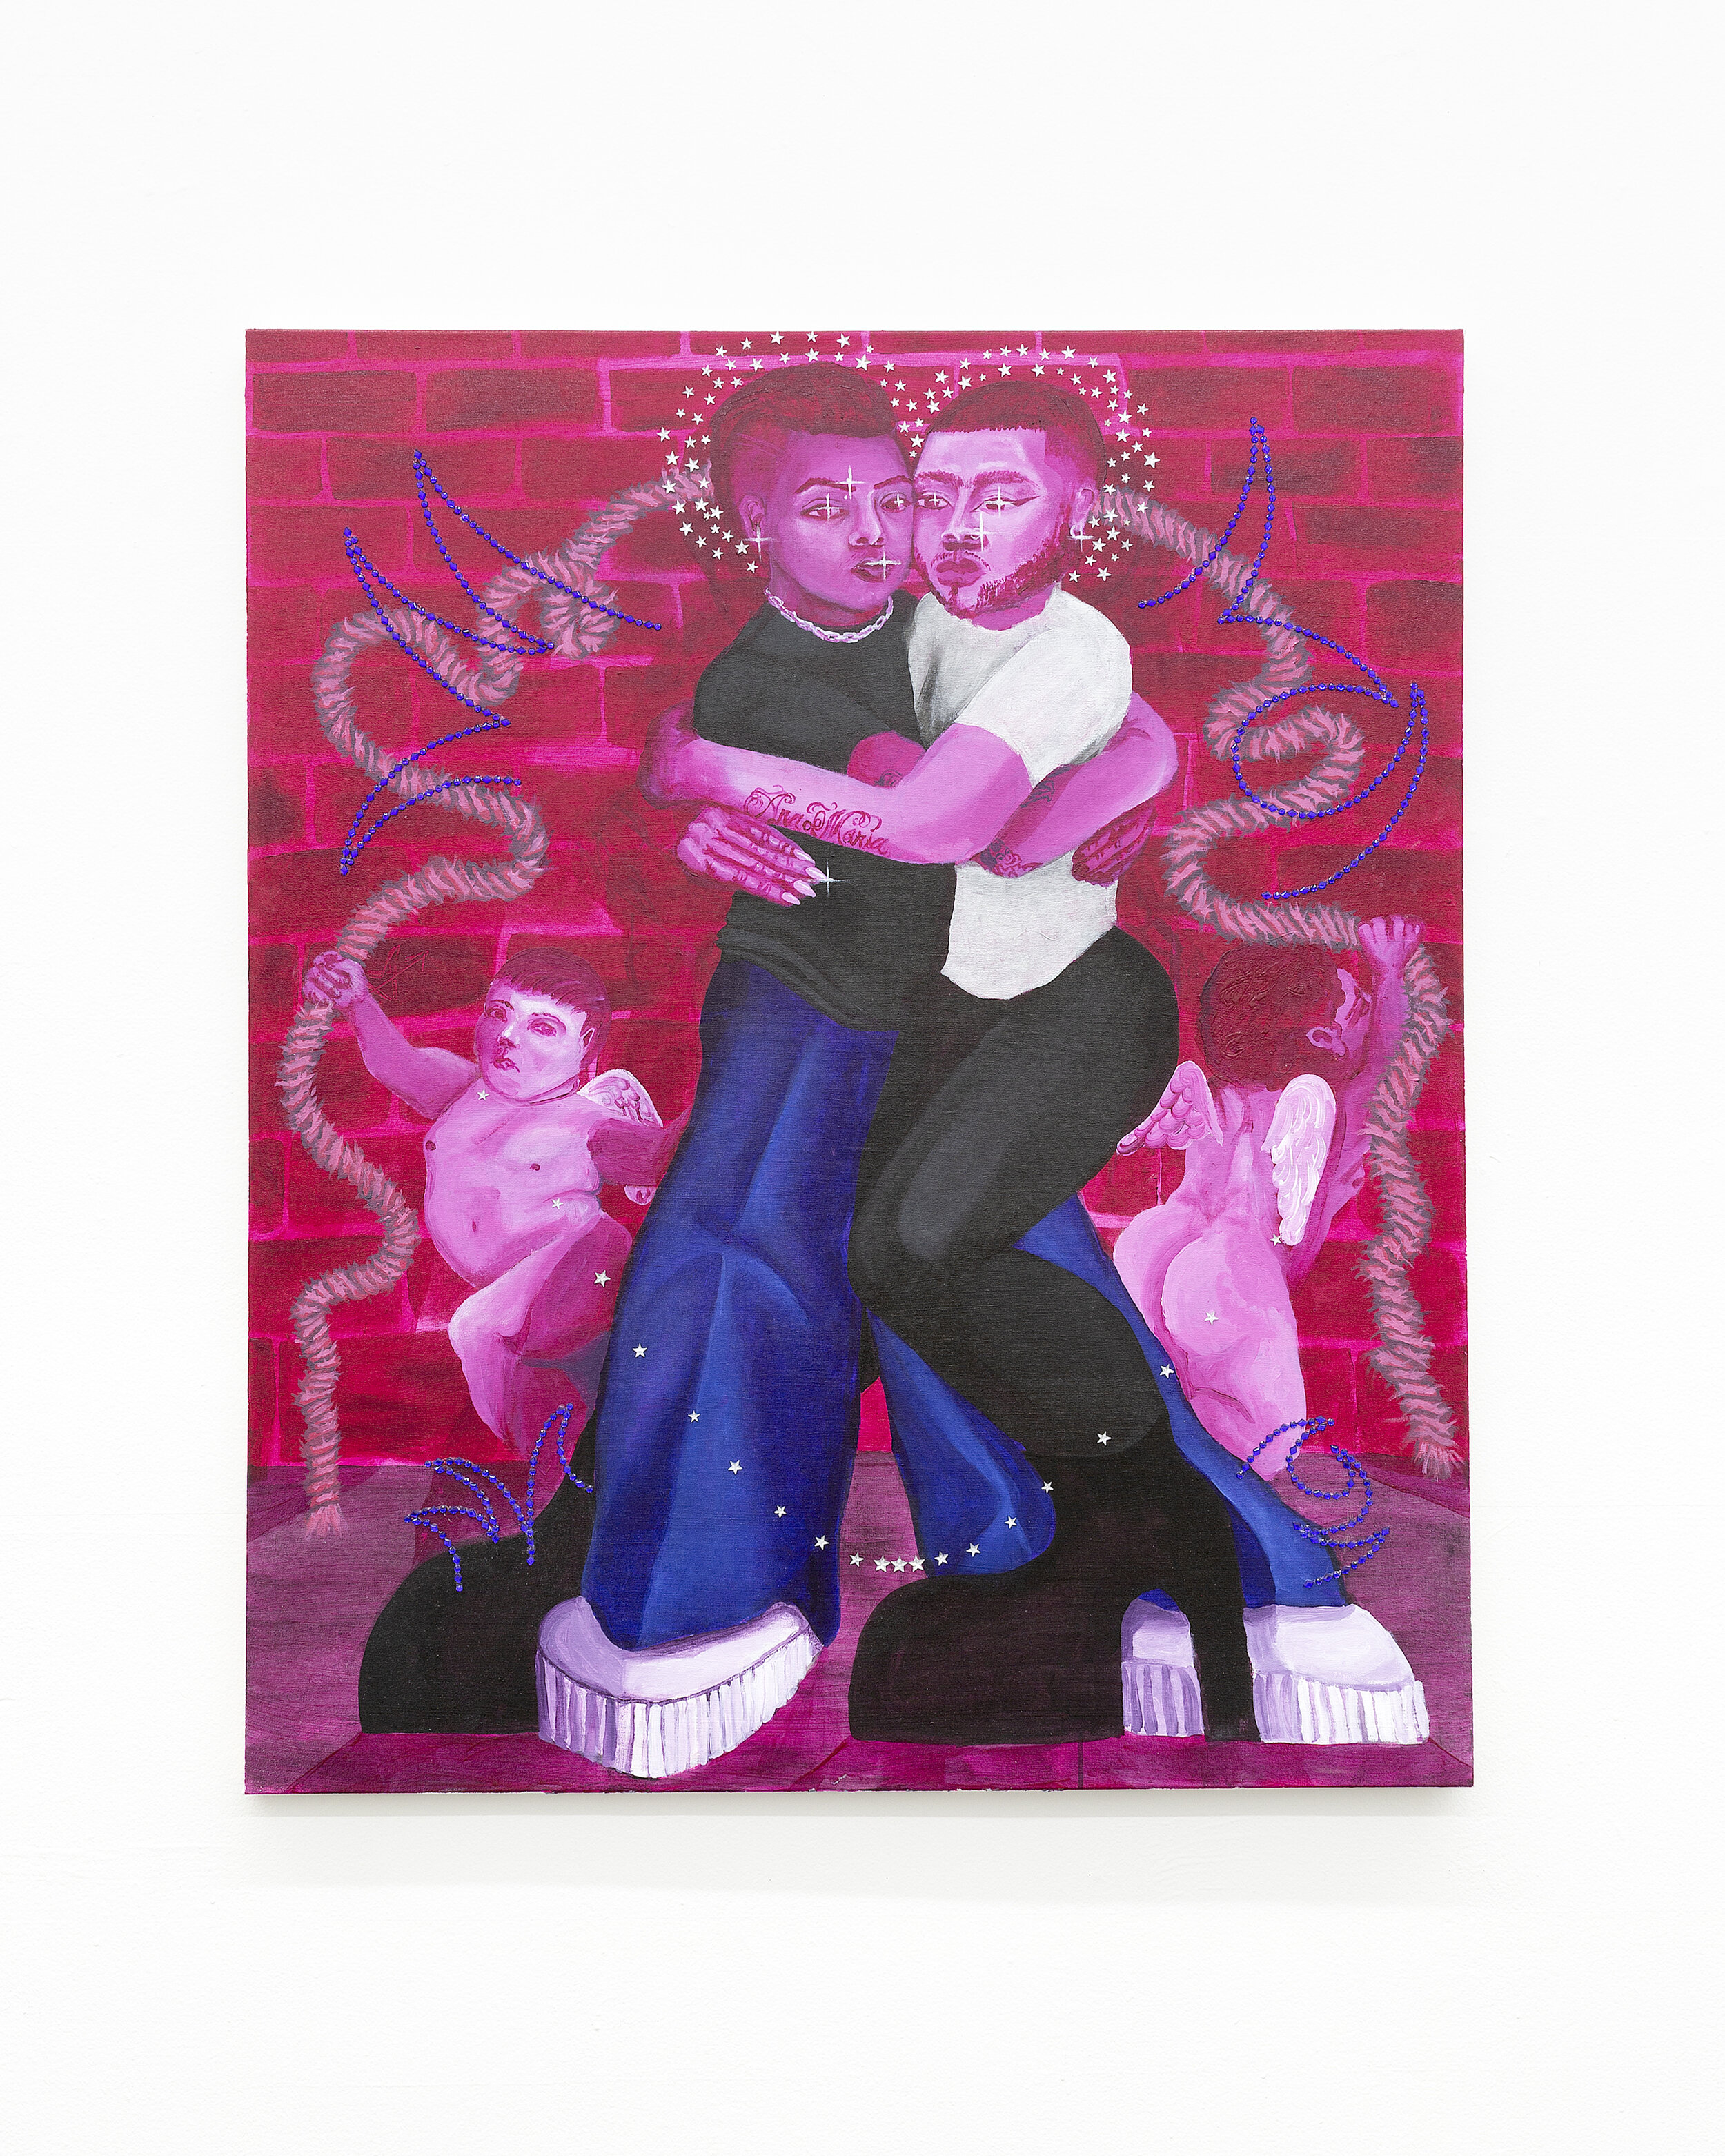 Juan Arango Palacios, Santa Amistad,  40 x 48 Inches,  Acrylic and rhinestones on canvas, 2021